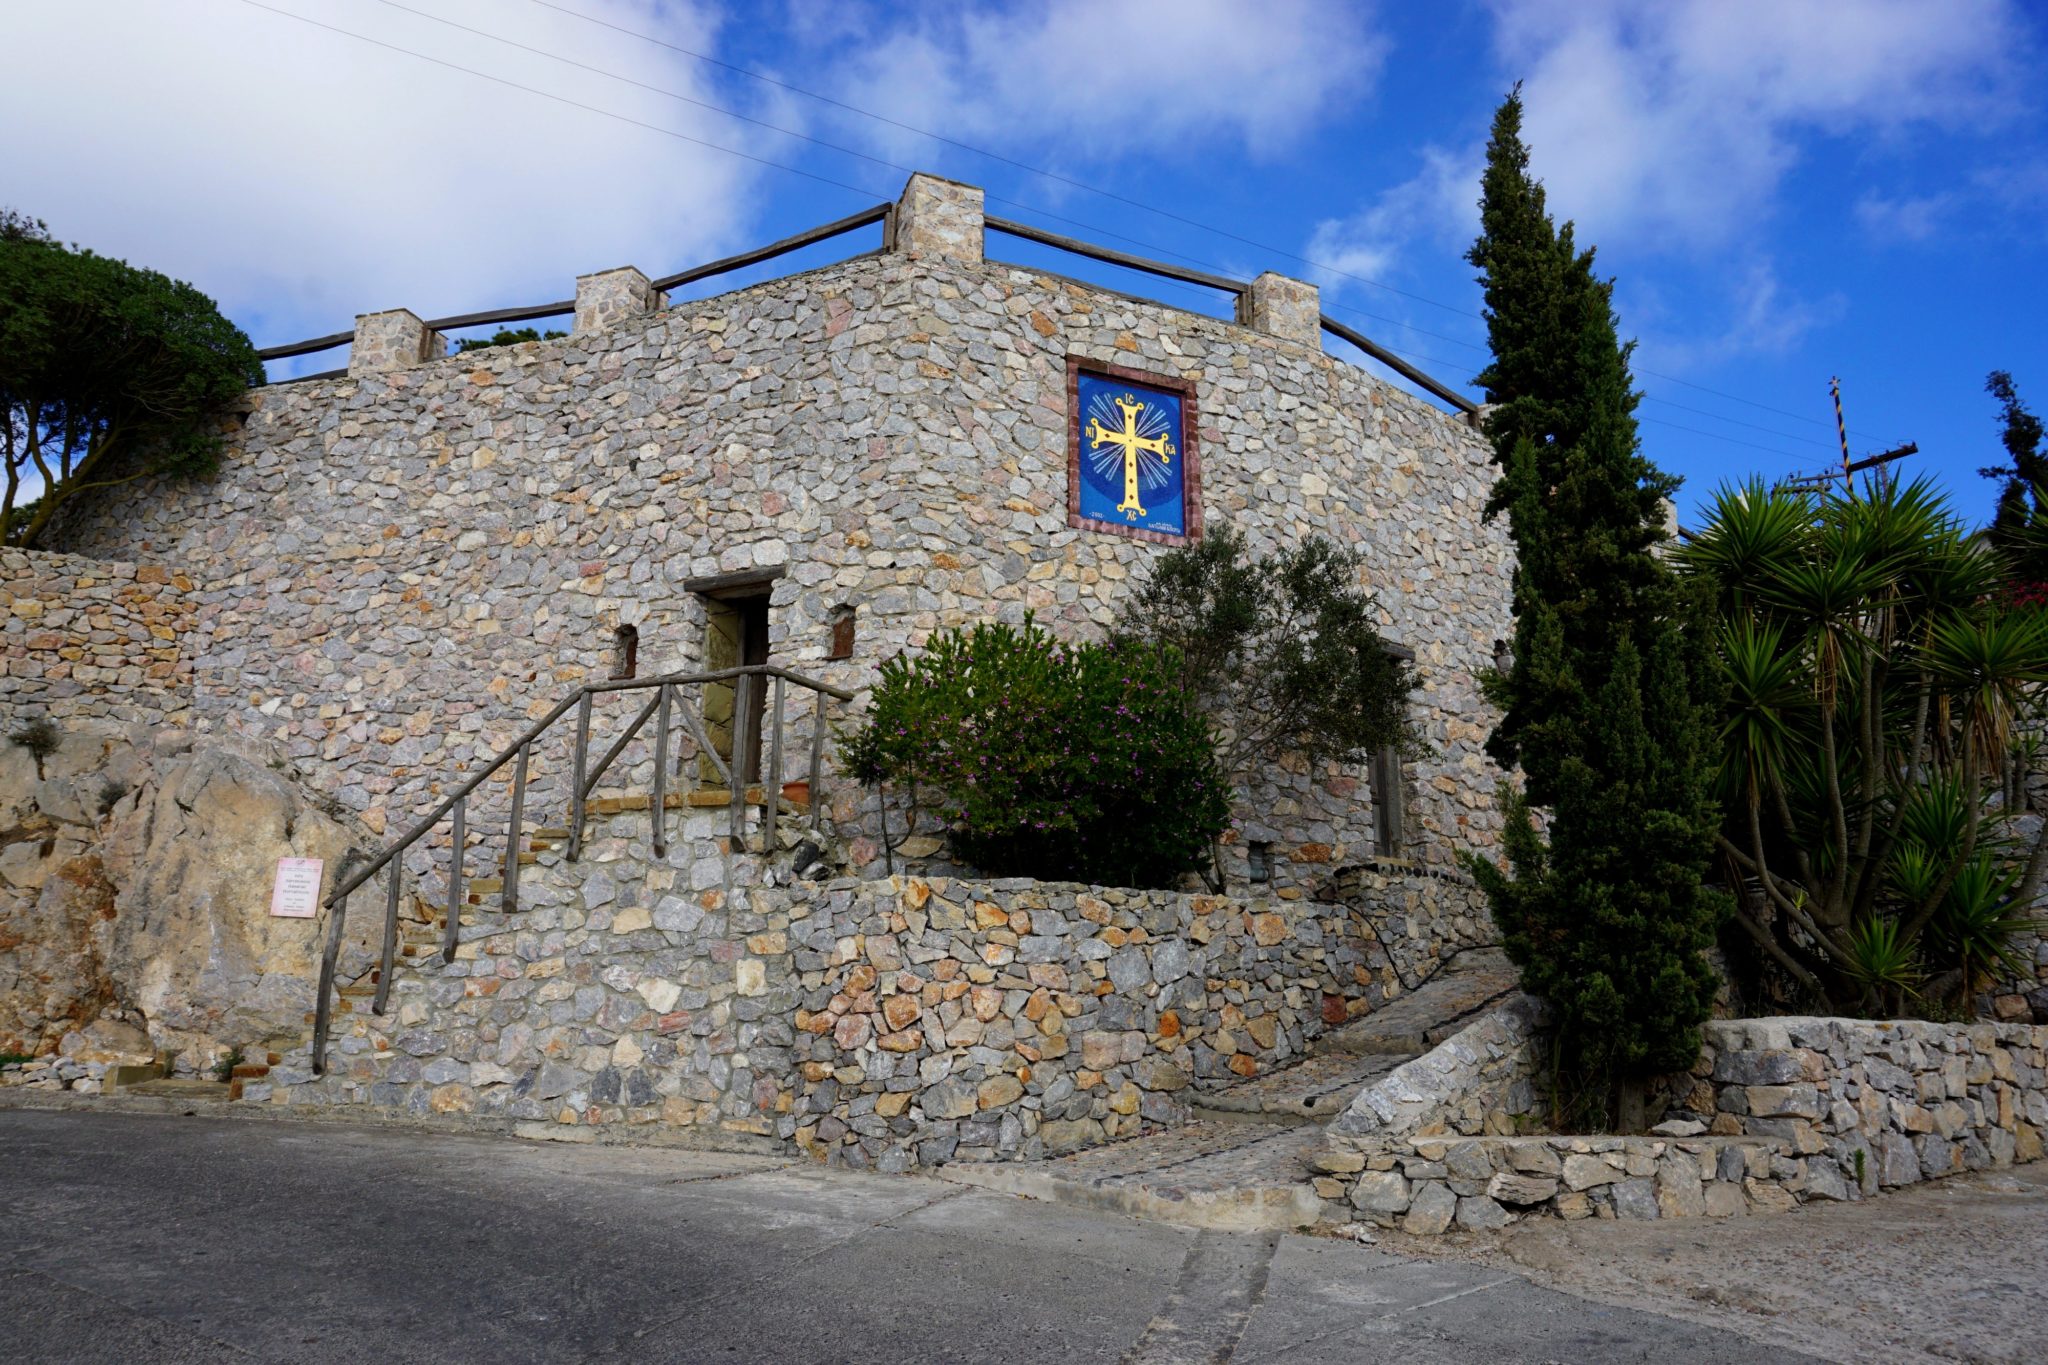 Profitis Ilias Monastery, the highest point in Santorini